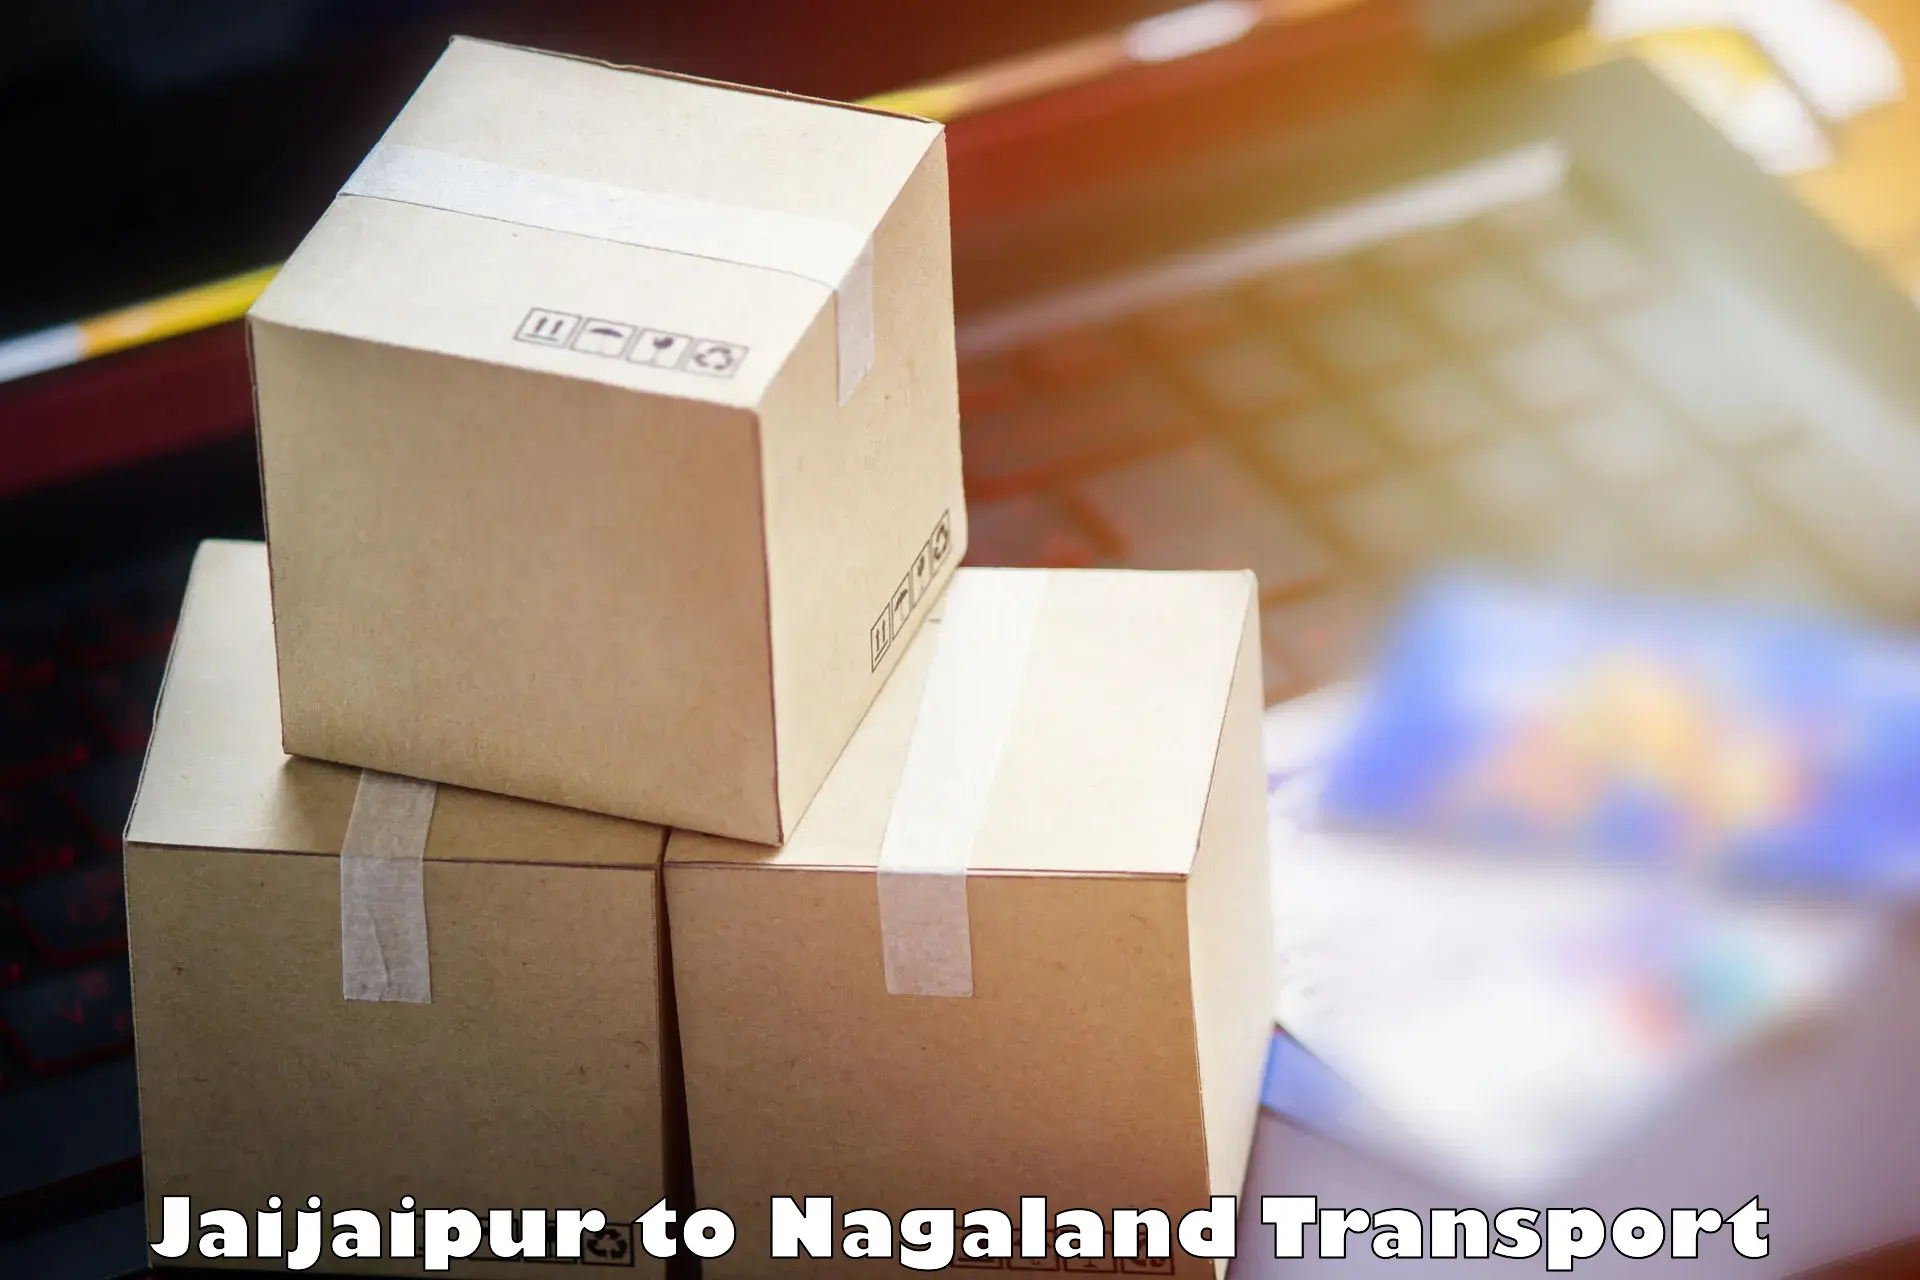 Furniture transport service Jaijaipur to Nagaland